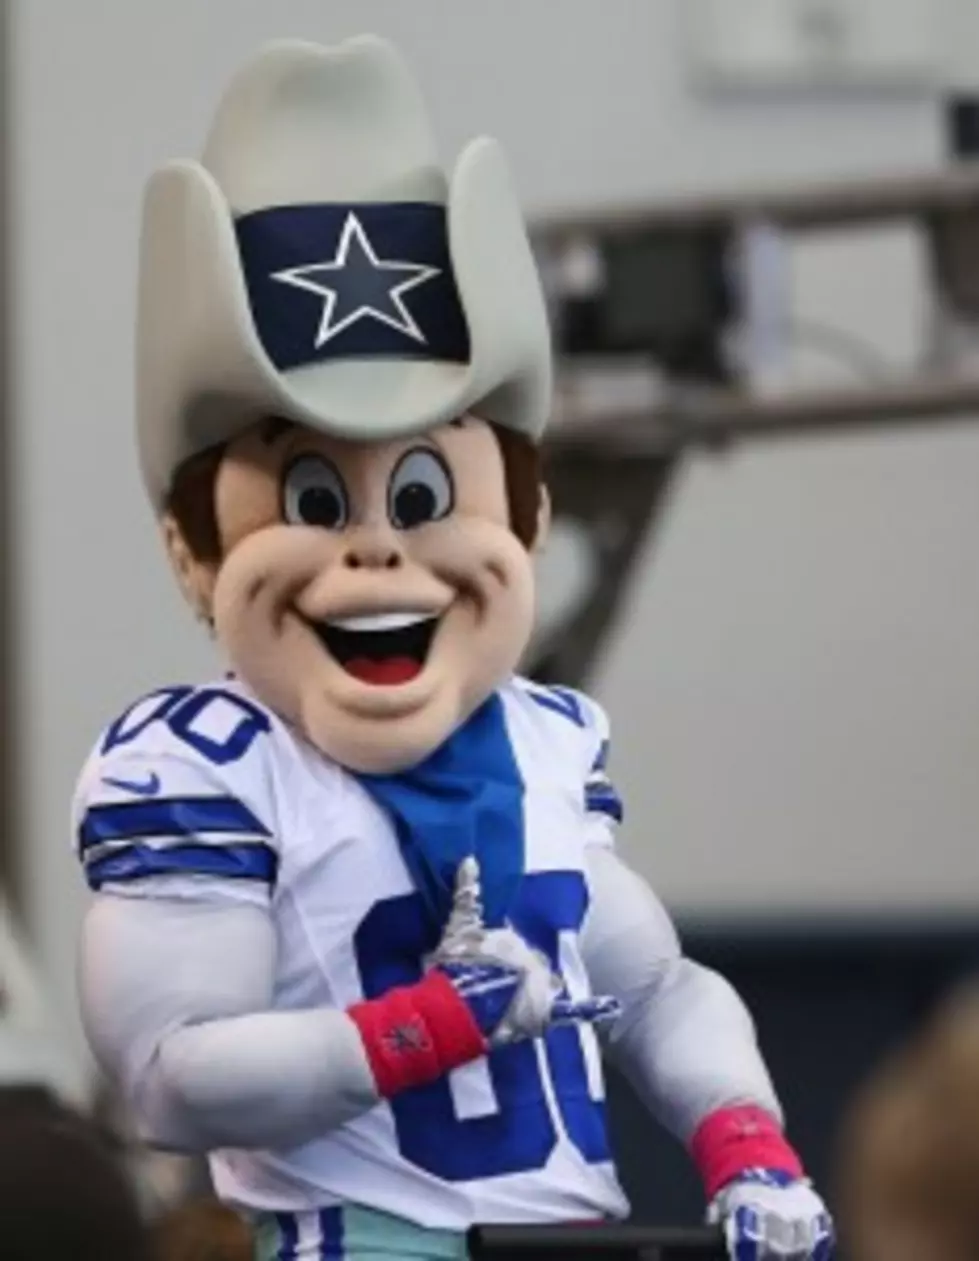 TxDot Teams Up With Dallas Cowboys in New Campaign